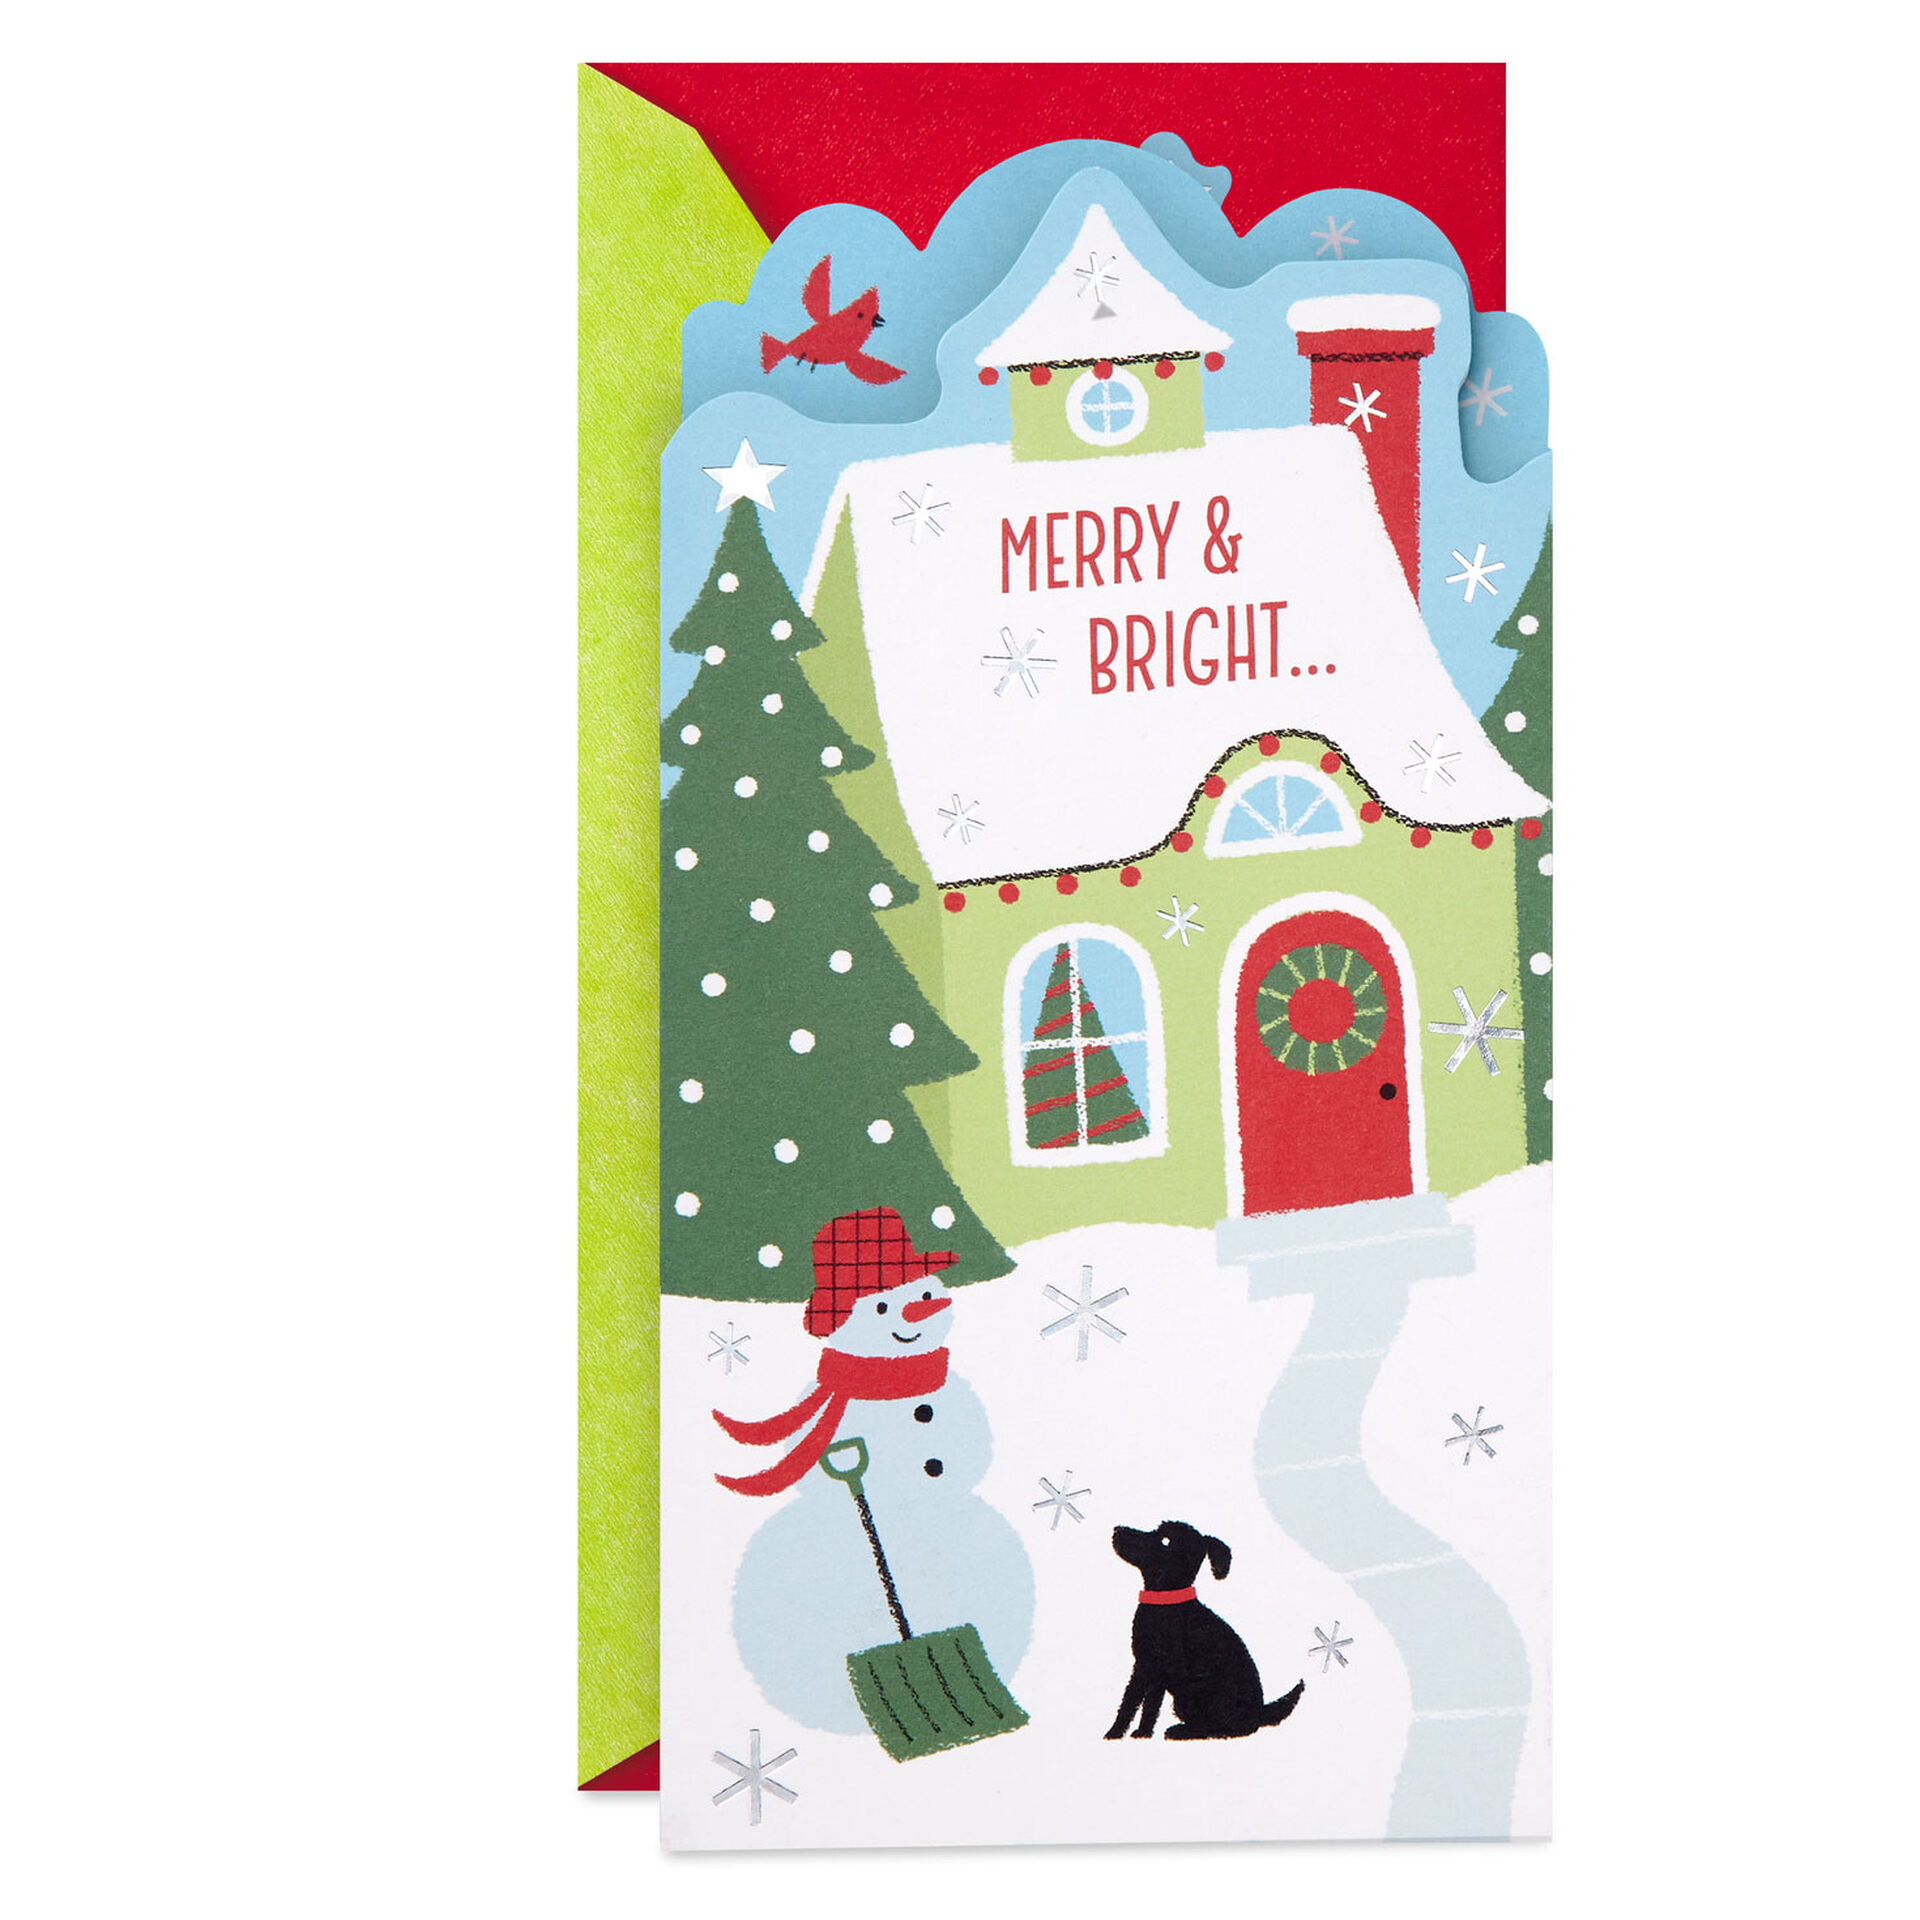 Merry and Bright Money Holder Christmas Card - Greeting Cards - Hallmark